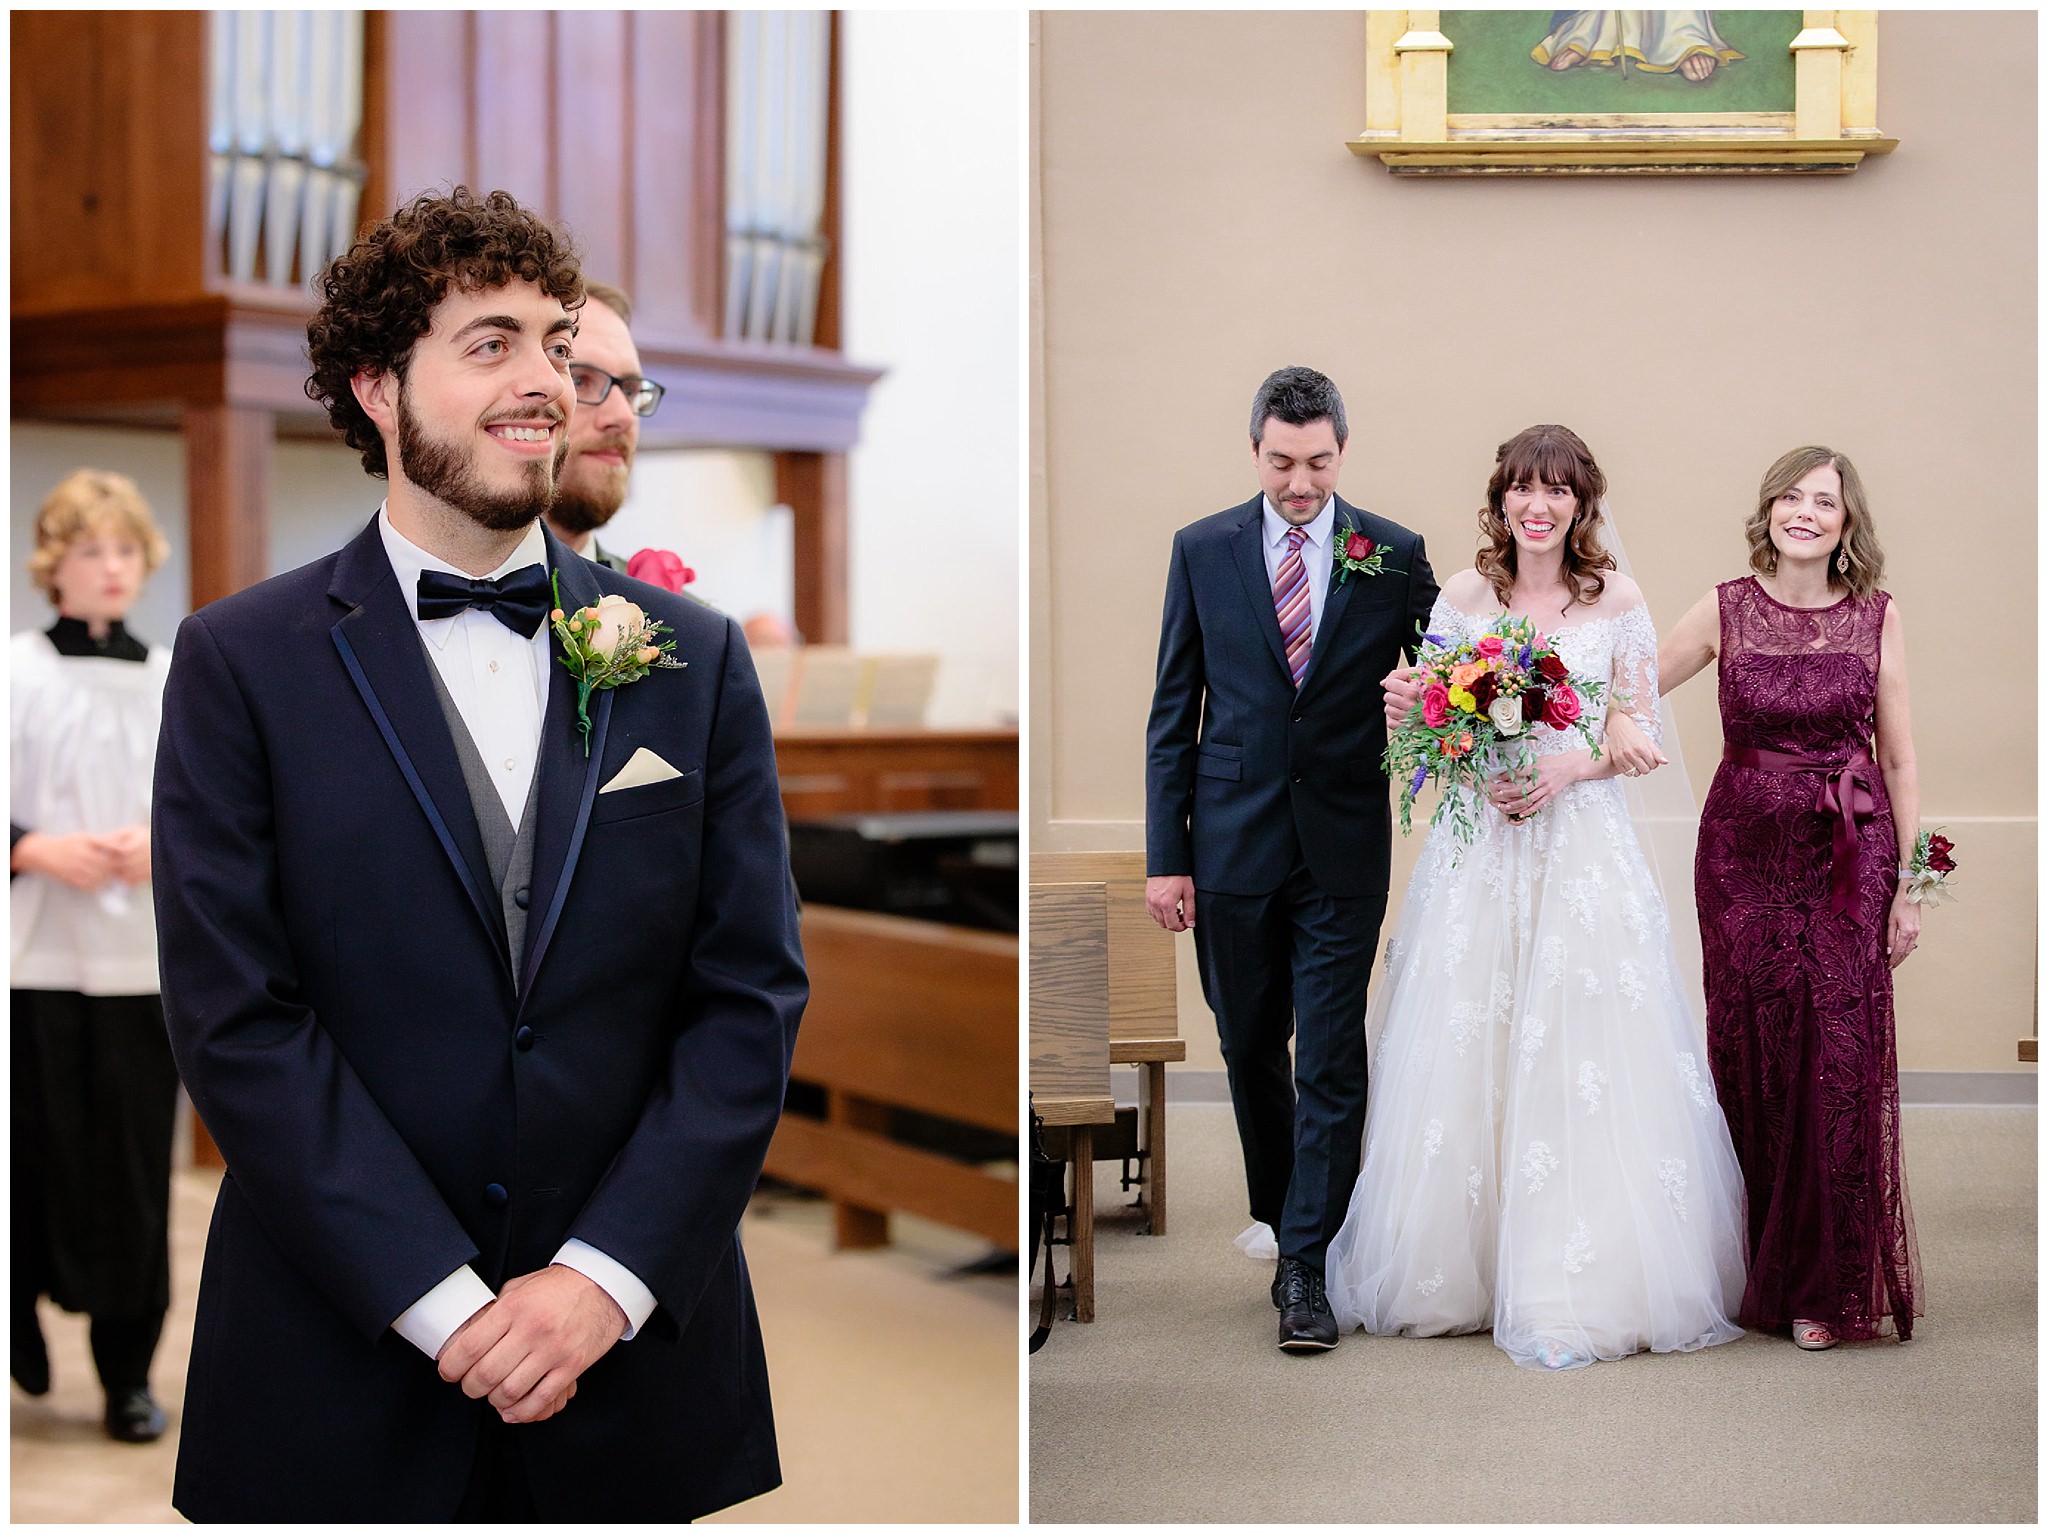 Groom smiles as the bride walks down the aisle at a Saint Monica Parish wedding